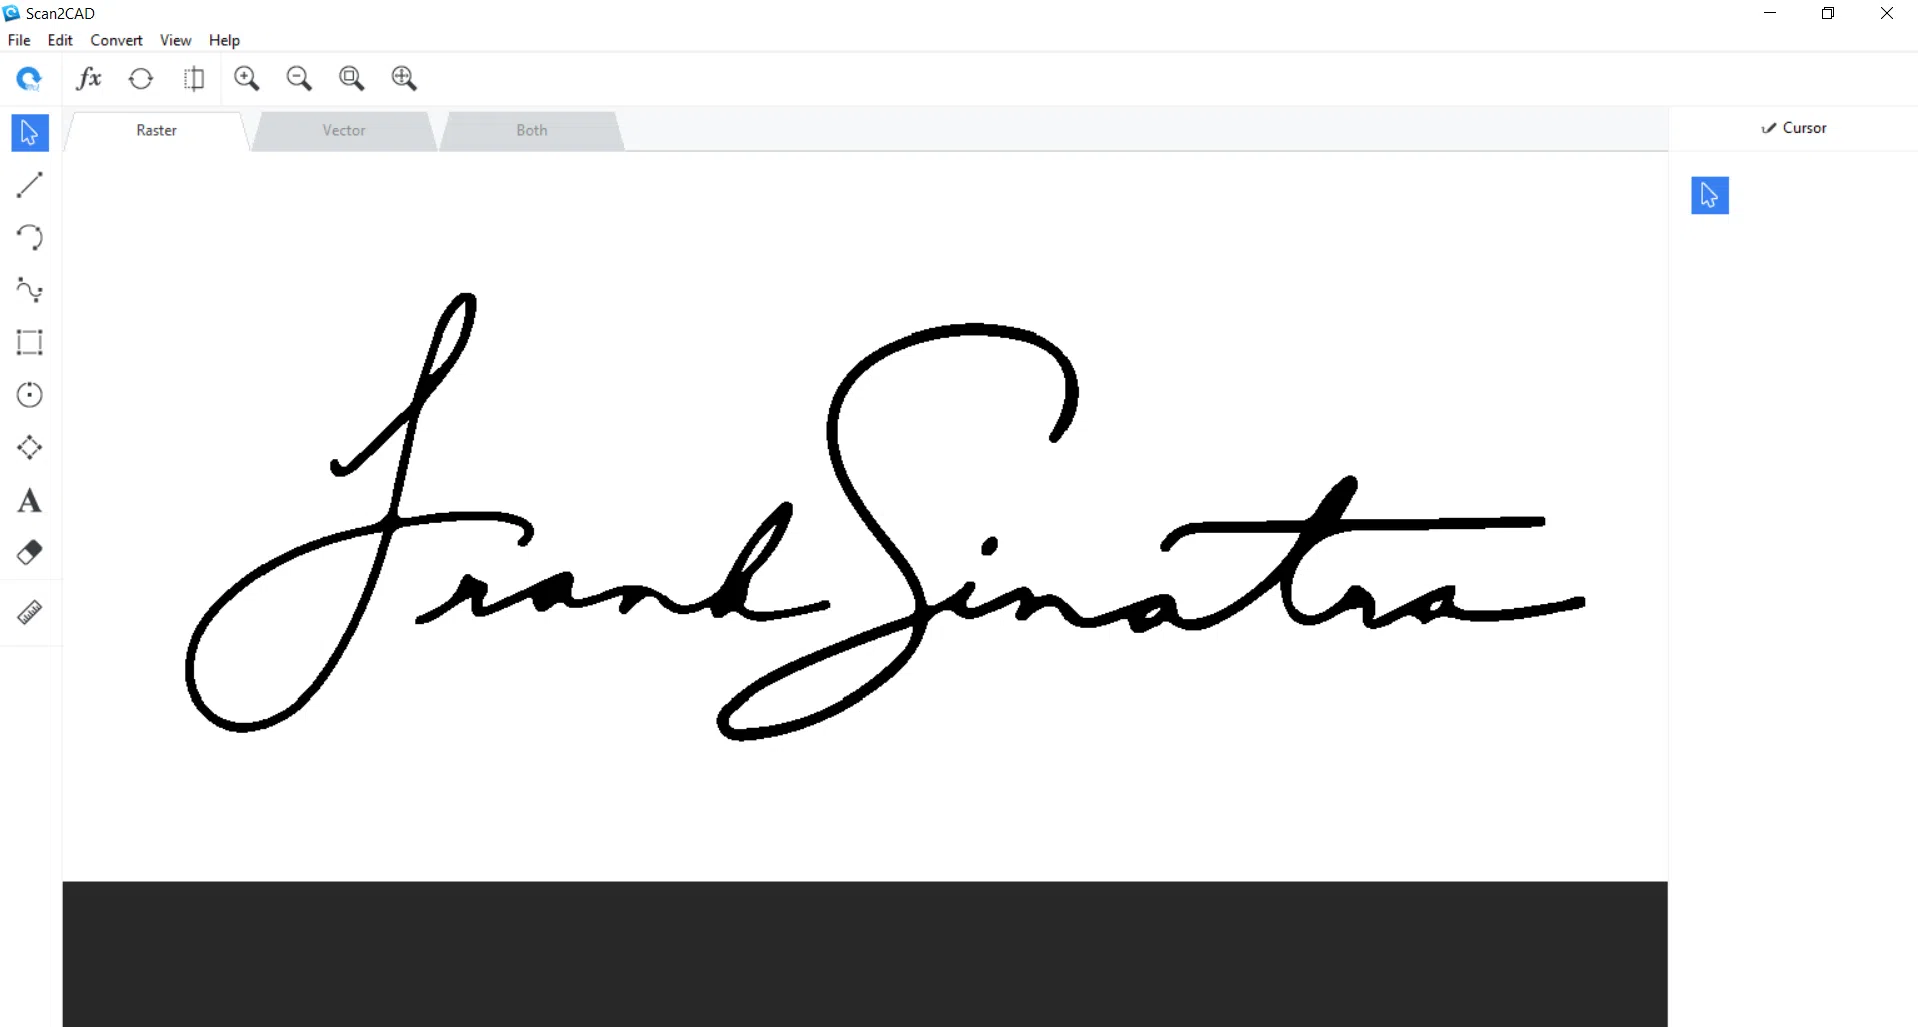 Frank Sinatra signature